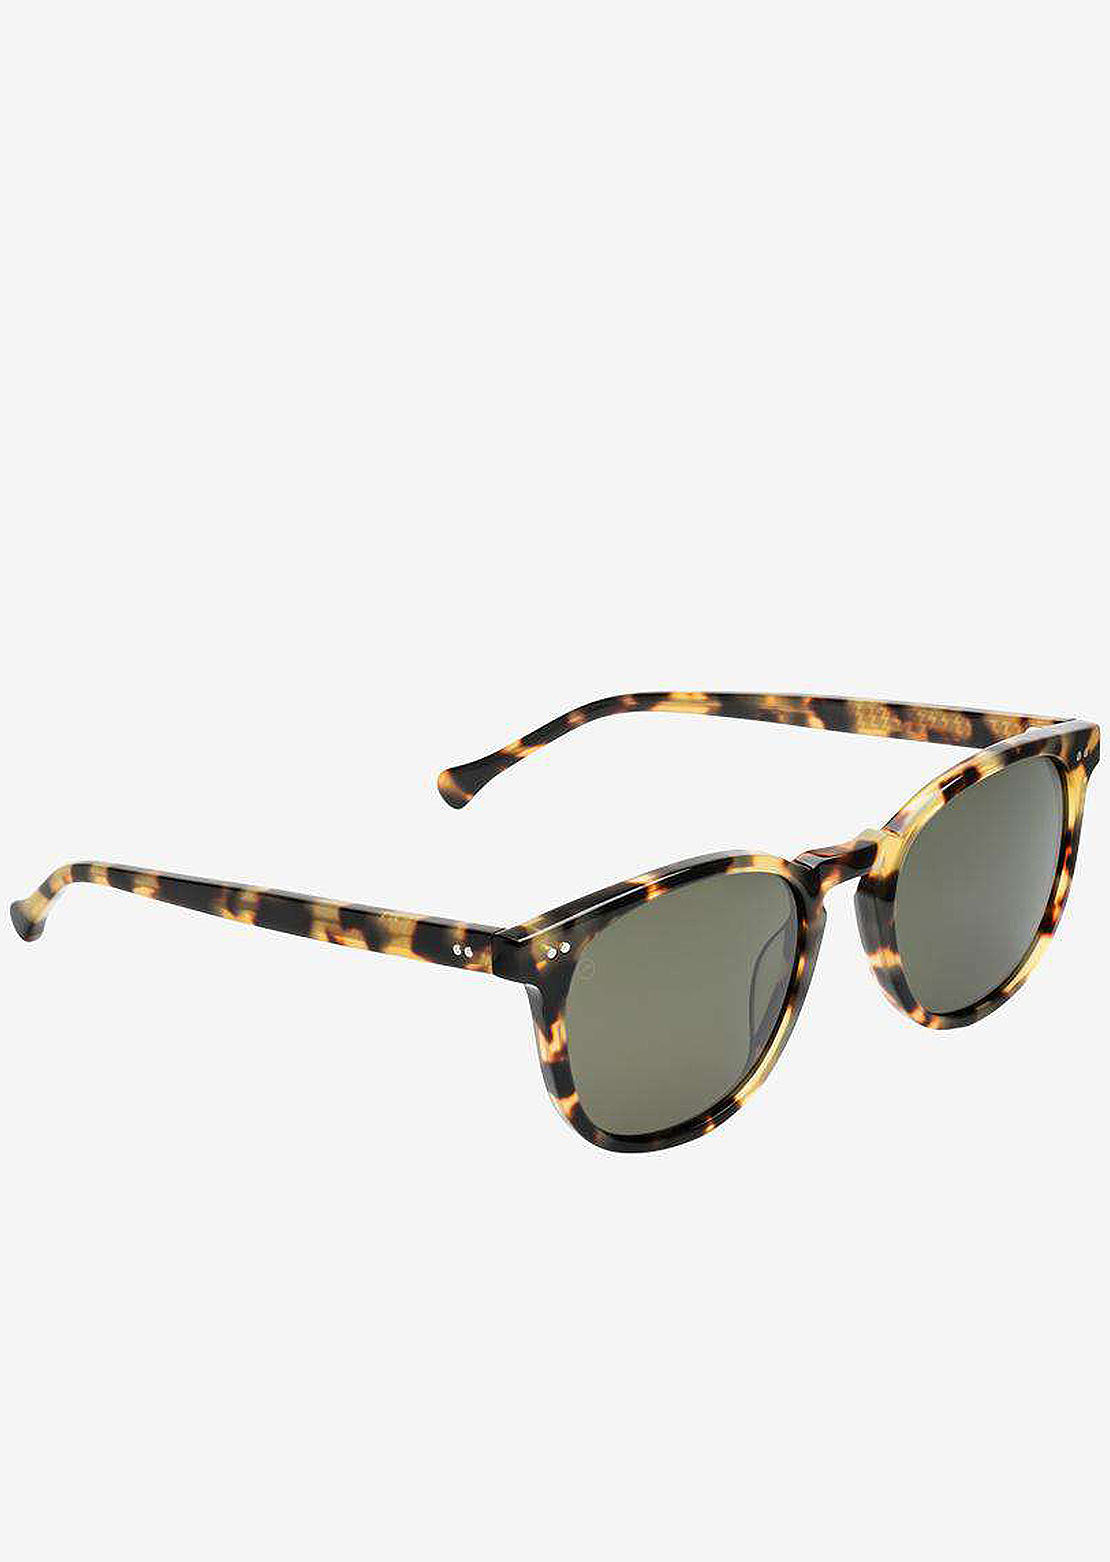 Electric Oak Polarized Sunglasses Gloss Spotted Tort/Grey Polarized